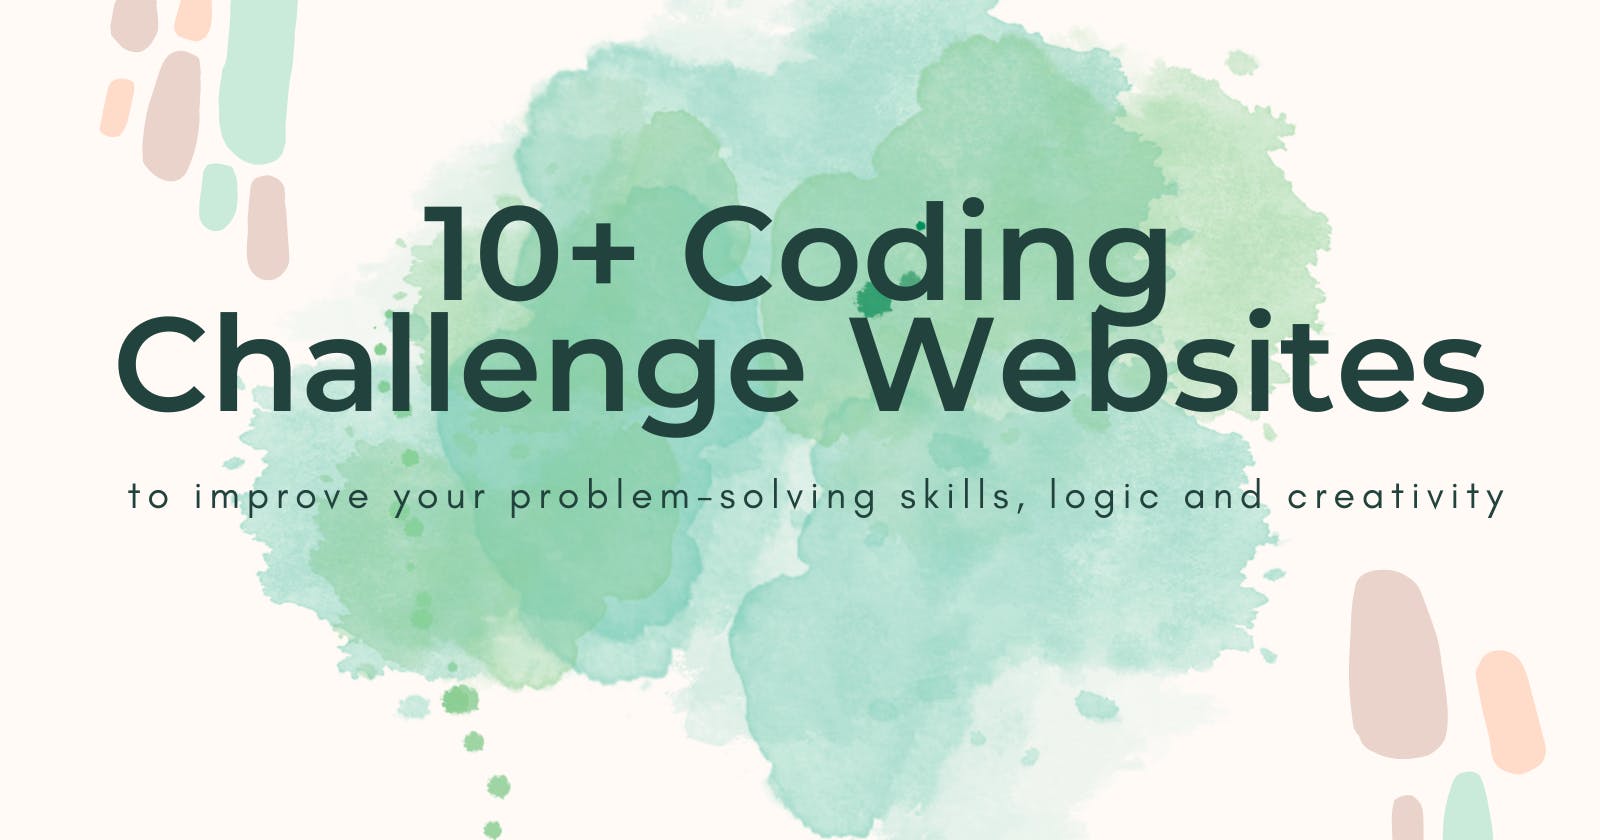 10+ Coding Challenge Websites to improve problem-solving skills, logic and creativity